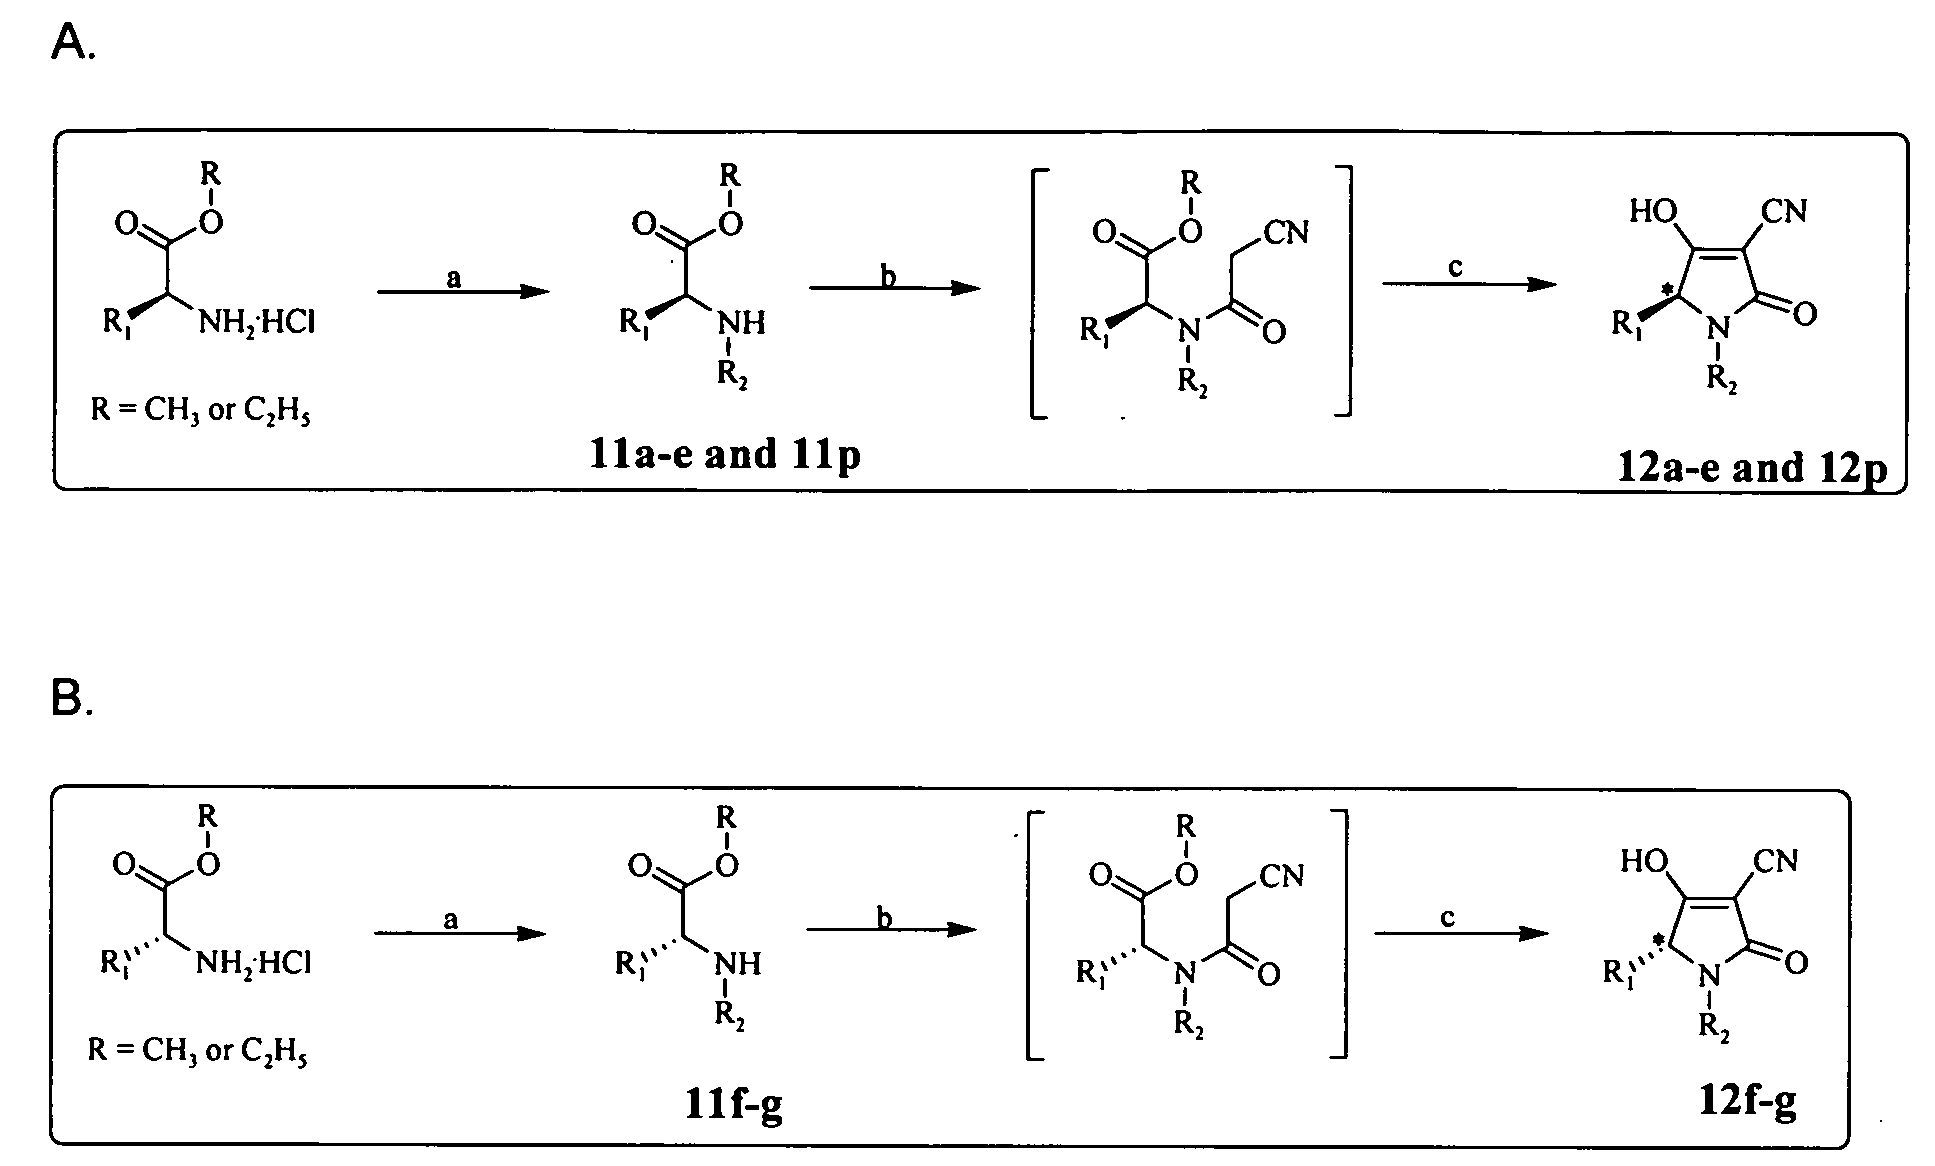 Analogs of tetramic acid